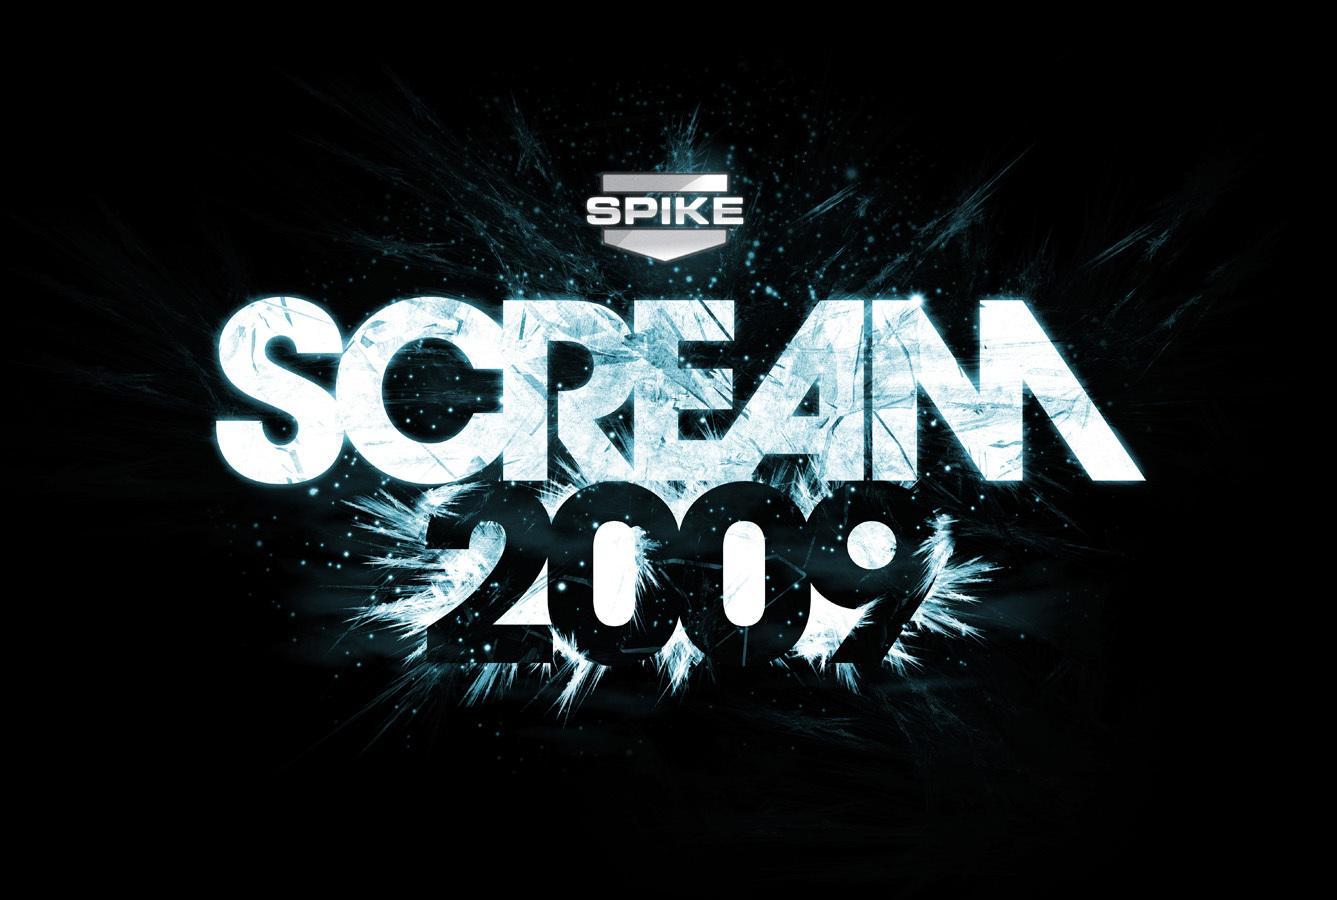 Big scream. Scream надпись. Scream 2009. 2010 - Scream.